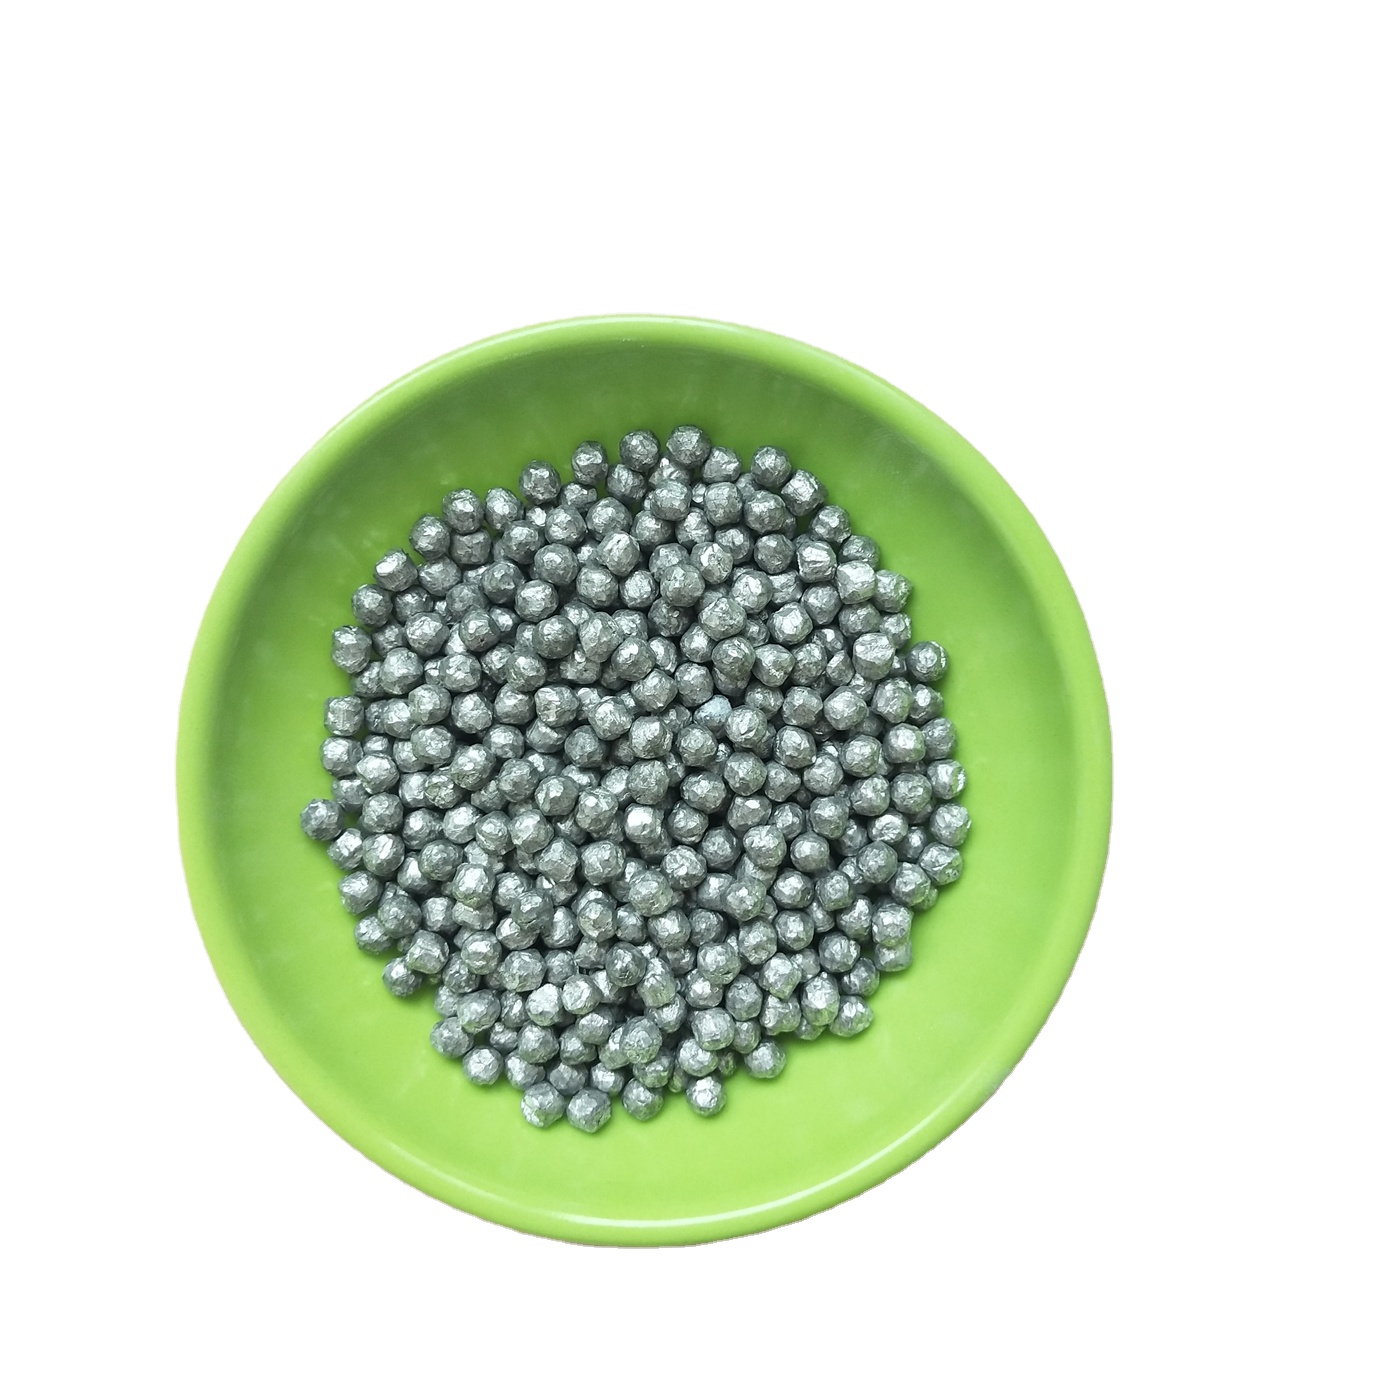 Metal Mg Pure Magnesium 99.95 % Magnesium Ball/Granules/Pellets 5mm in water treatment